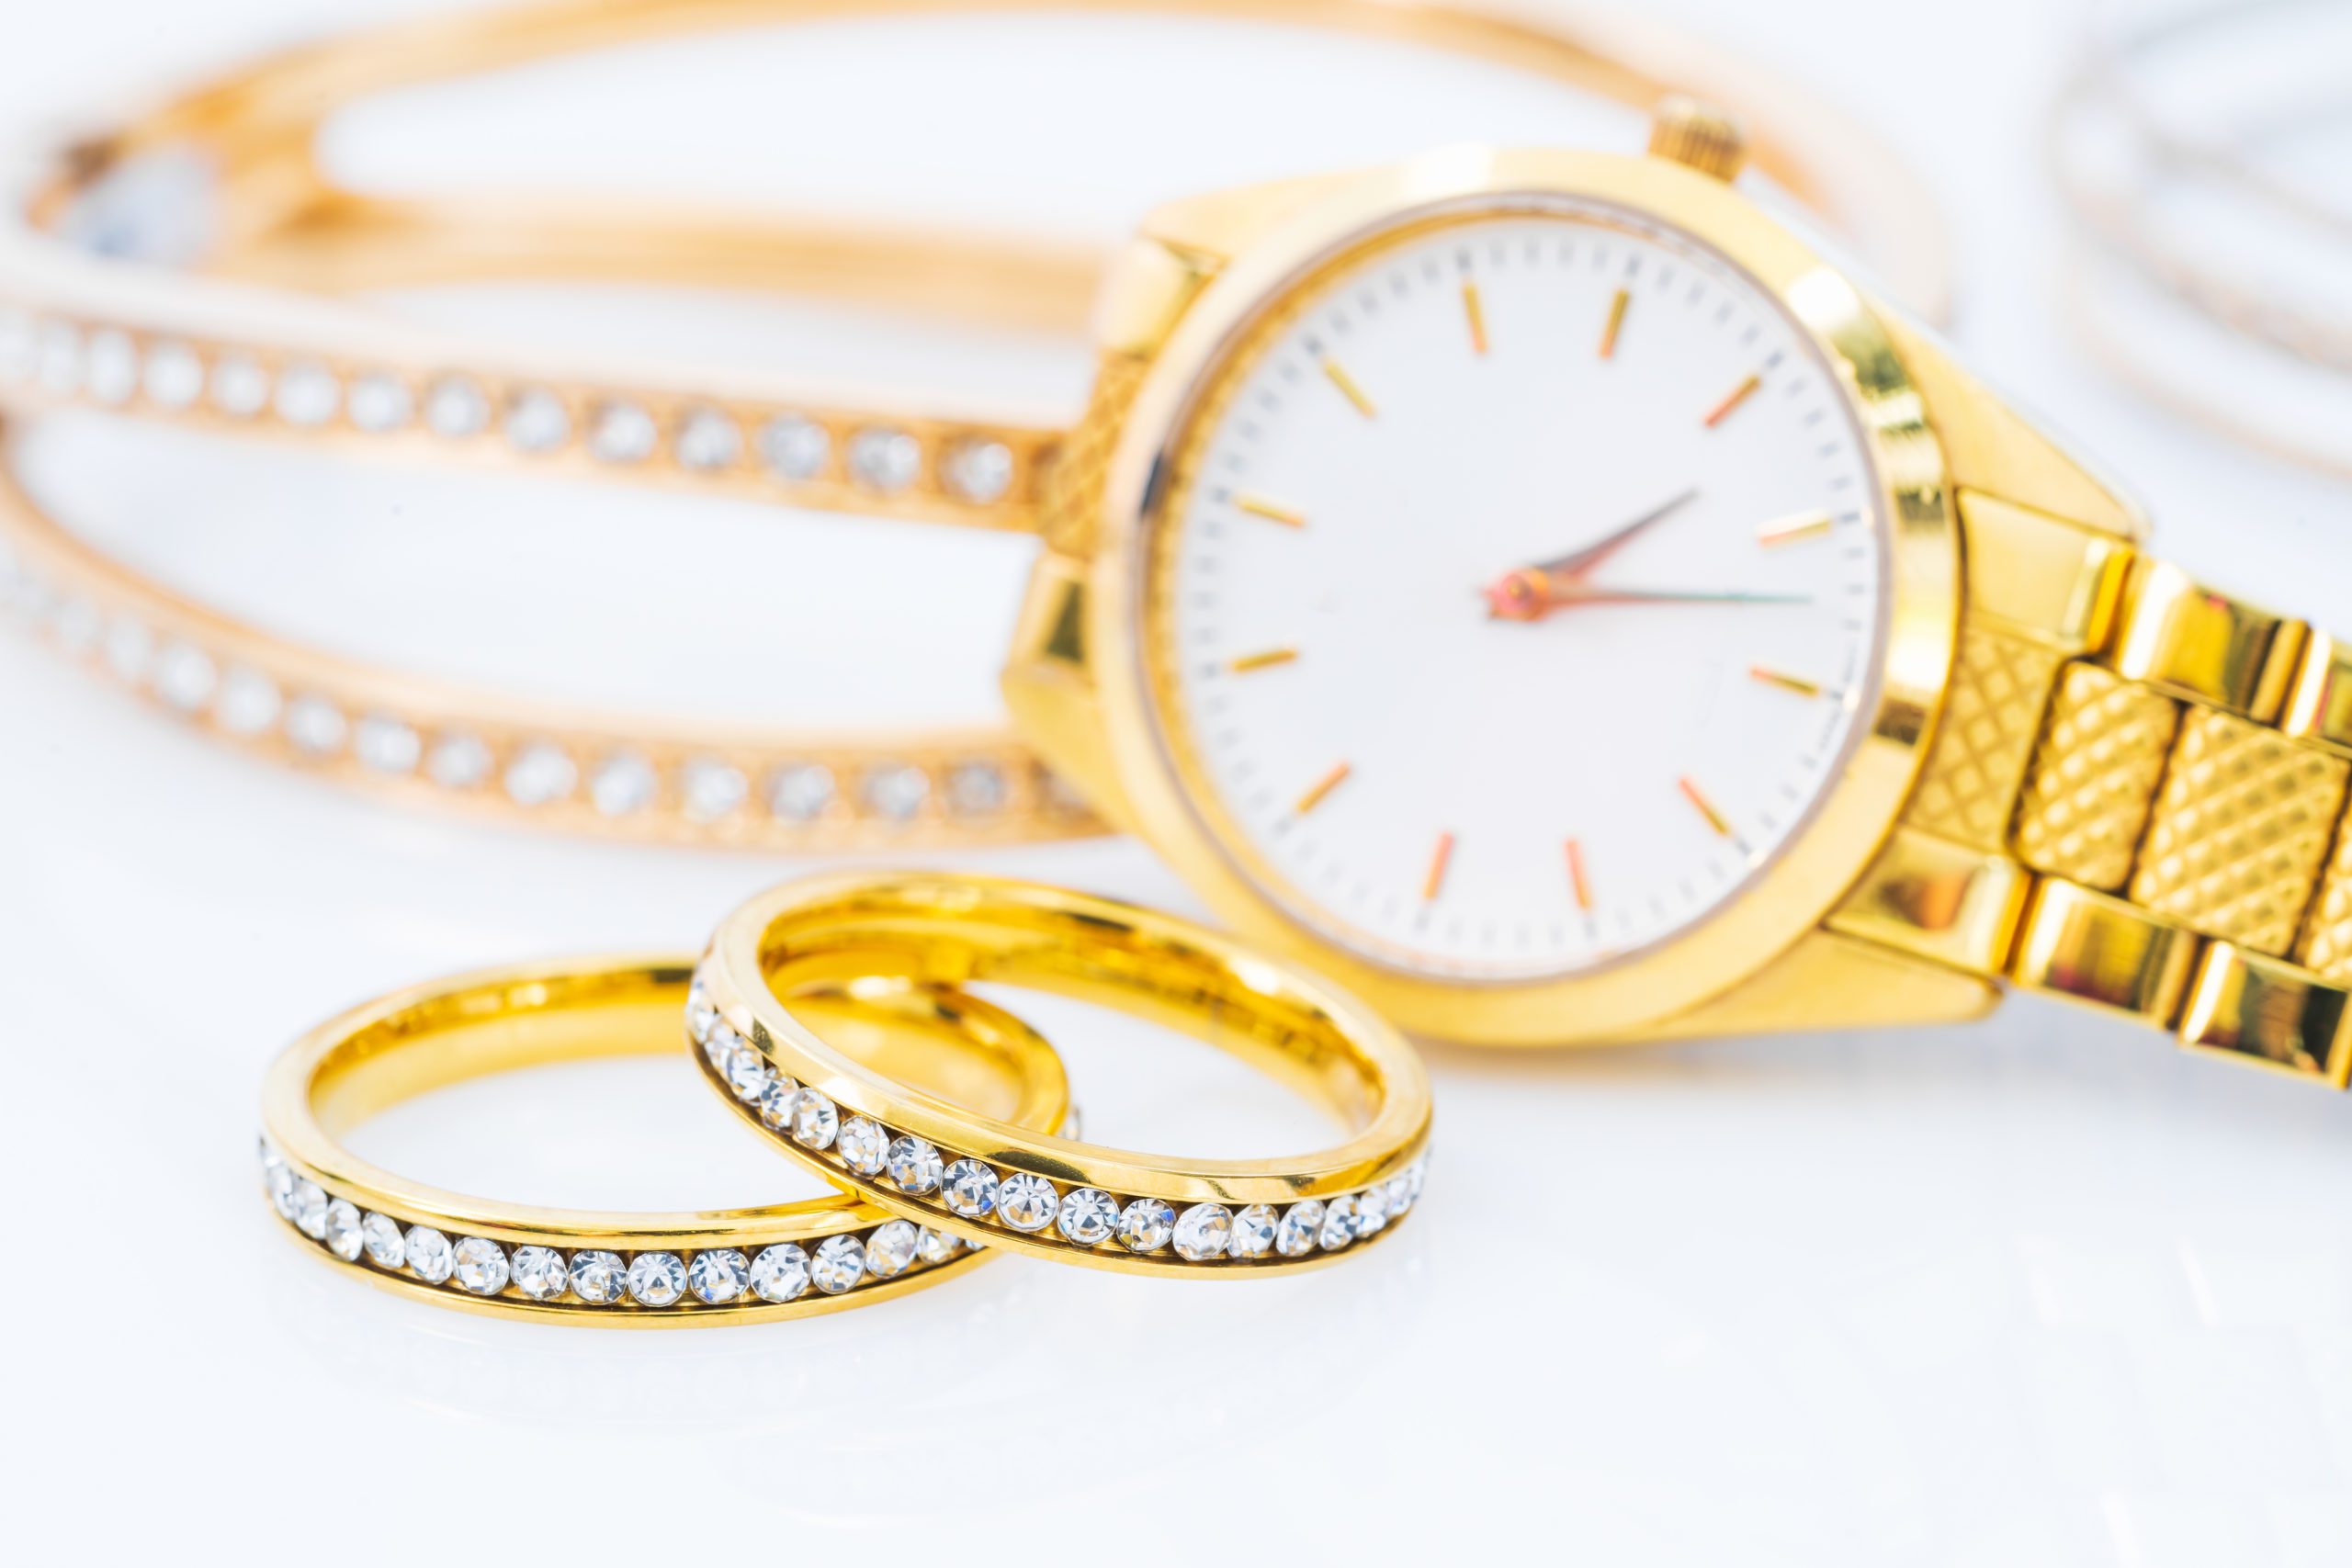 Gold Jewelry, Luxury Watch